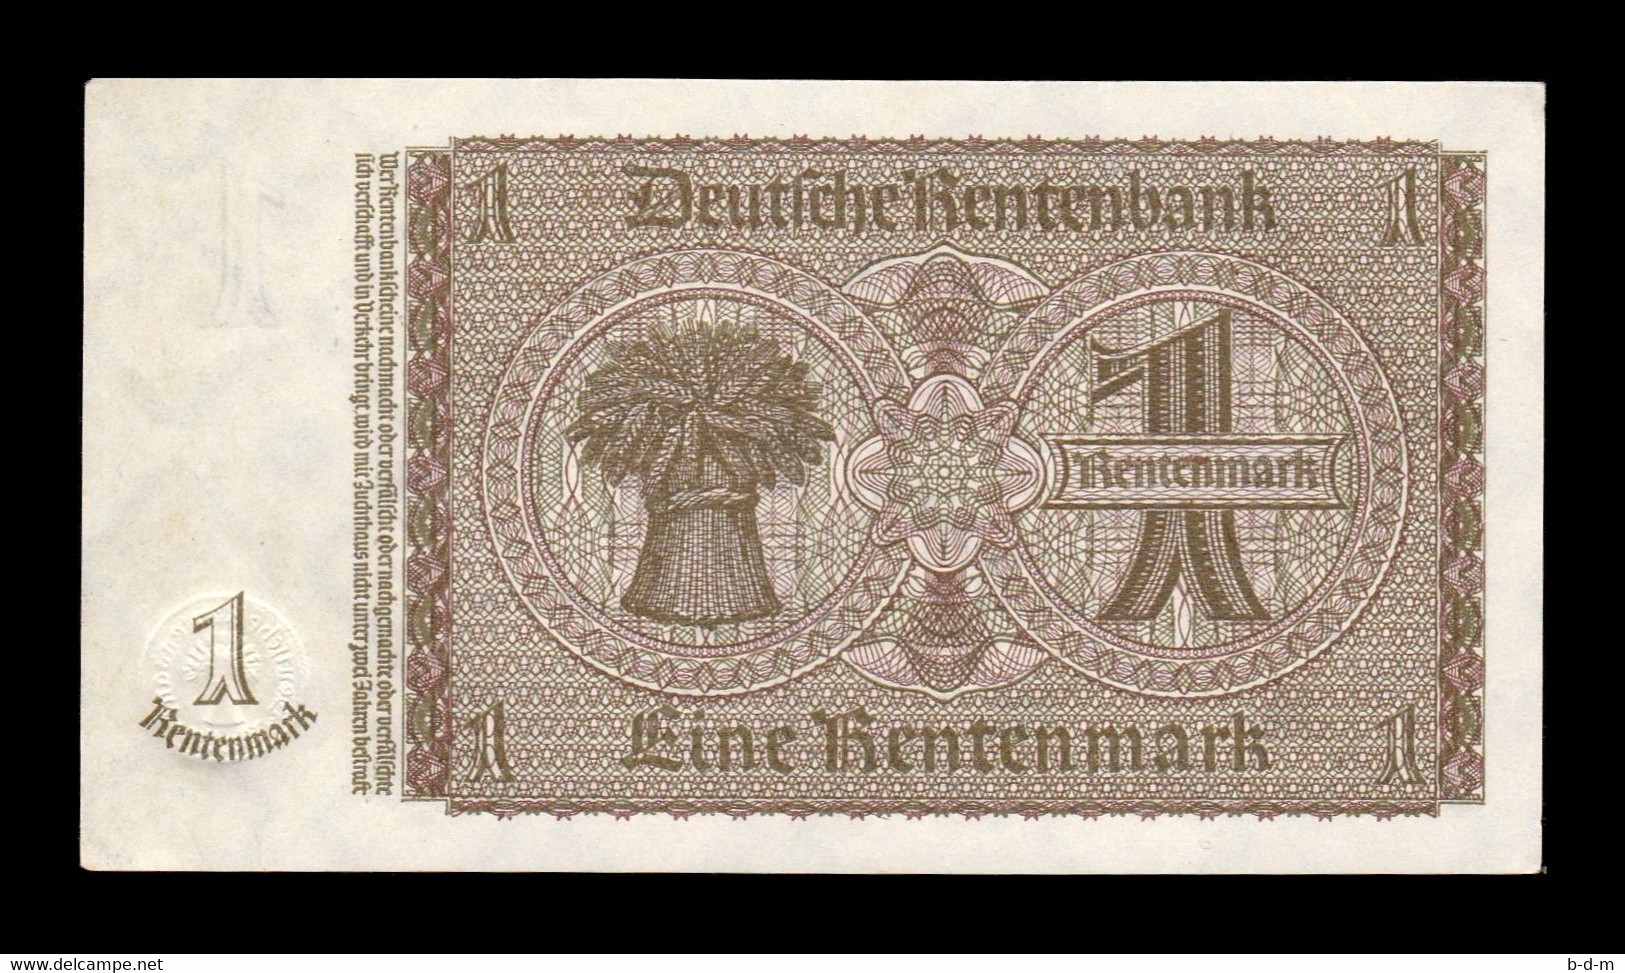 Alemania Germany 1 Rentenmark 1937 Pick 173b Sc- AUnc - 1 Rentenmark